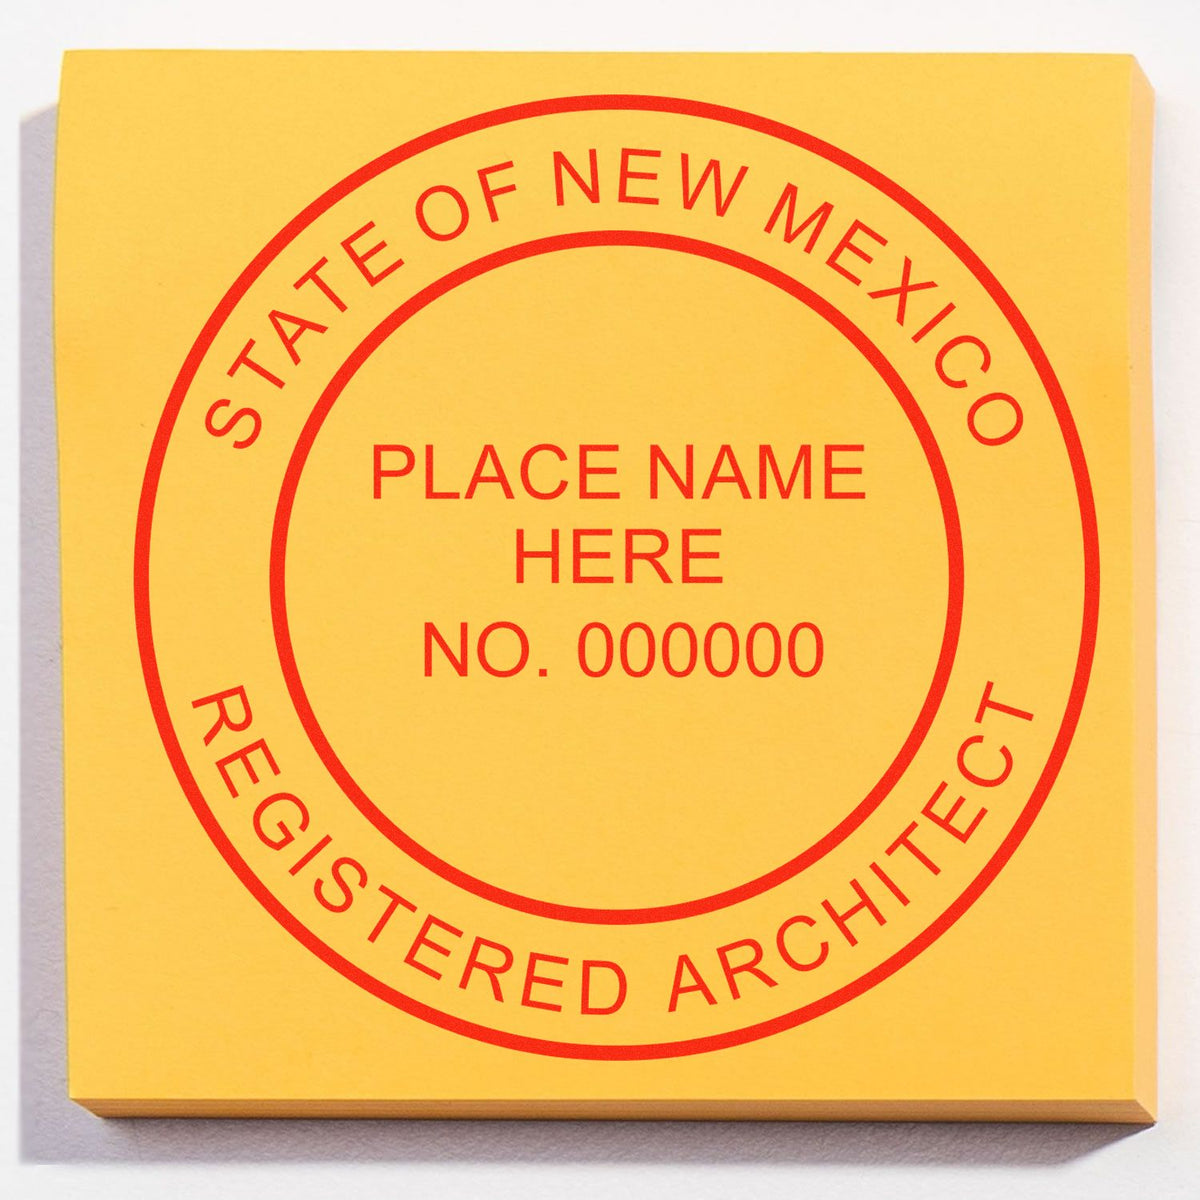 New Mexico Architect Seal Stamp Lifestyle Photo